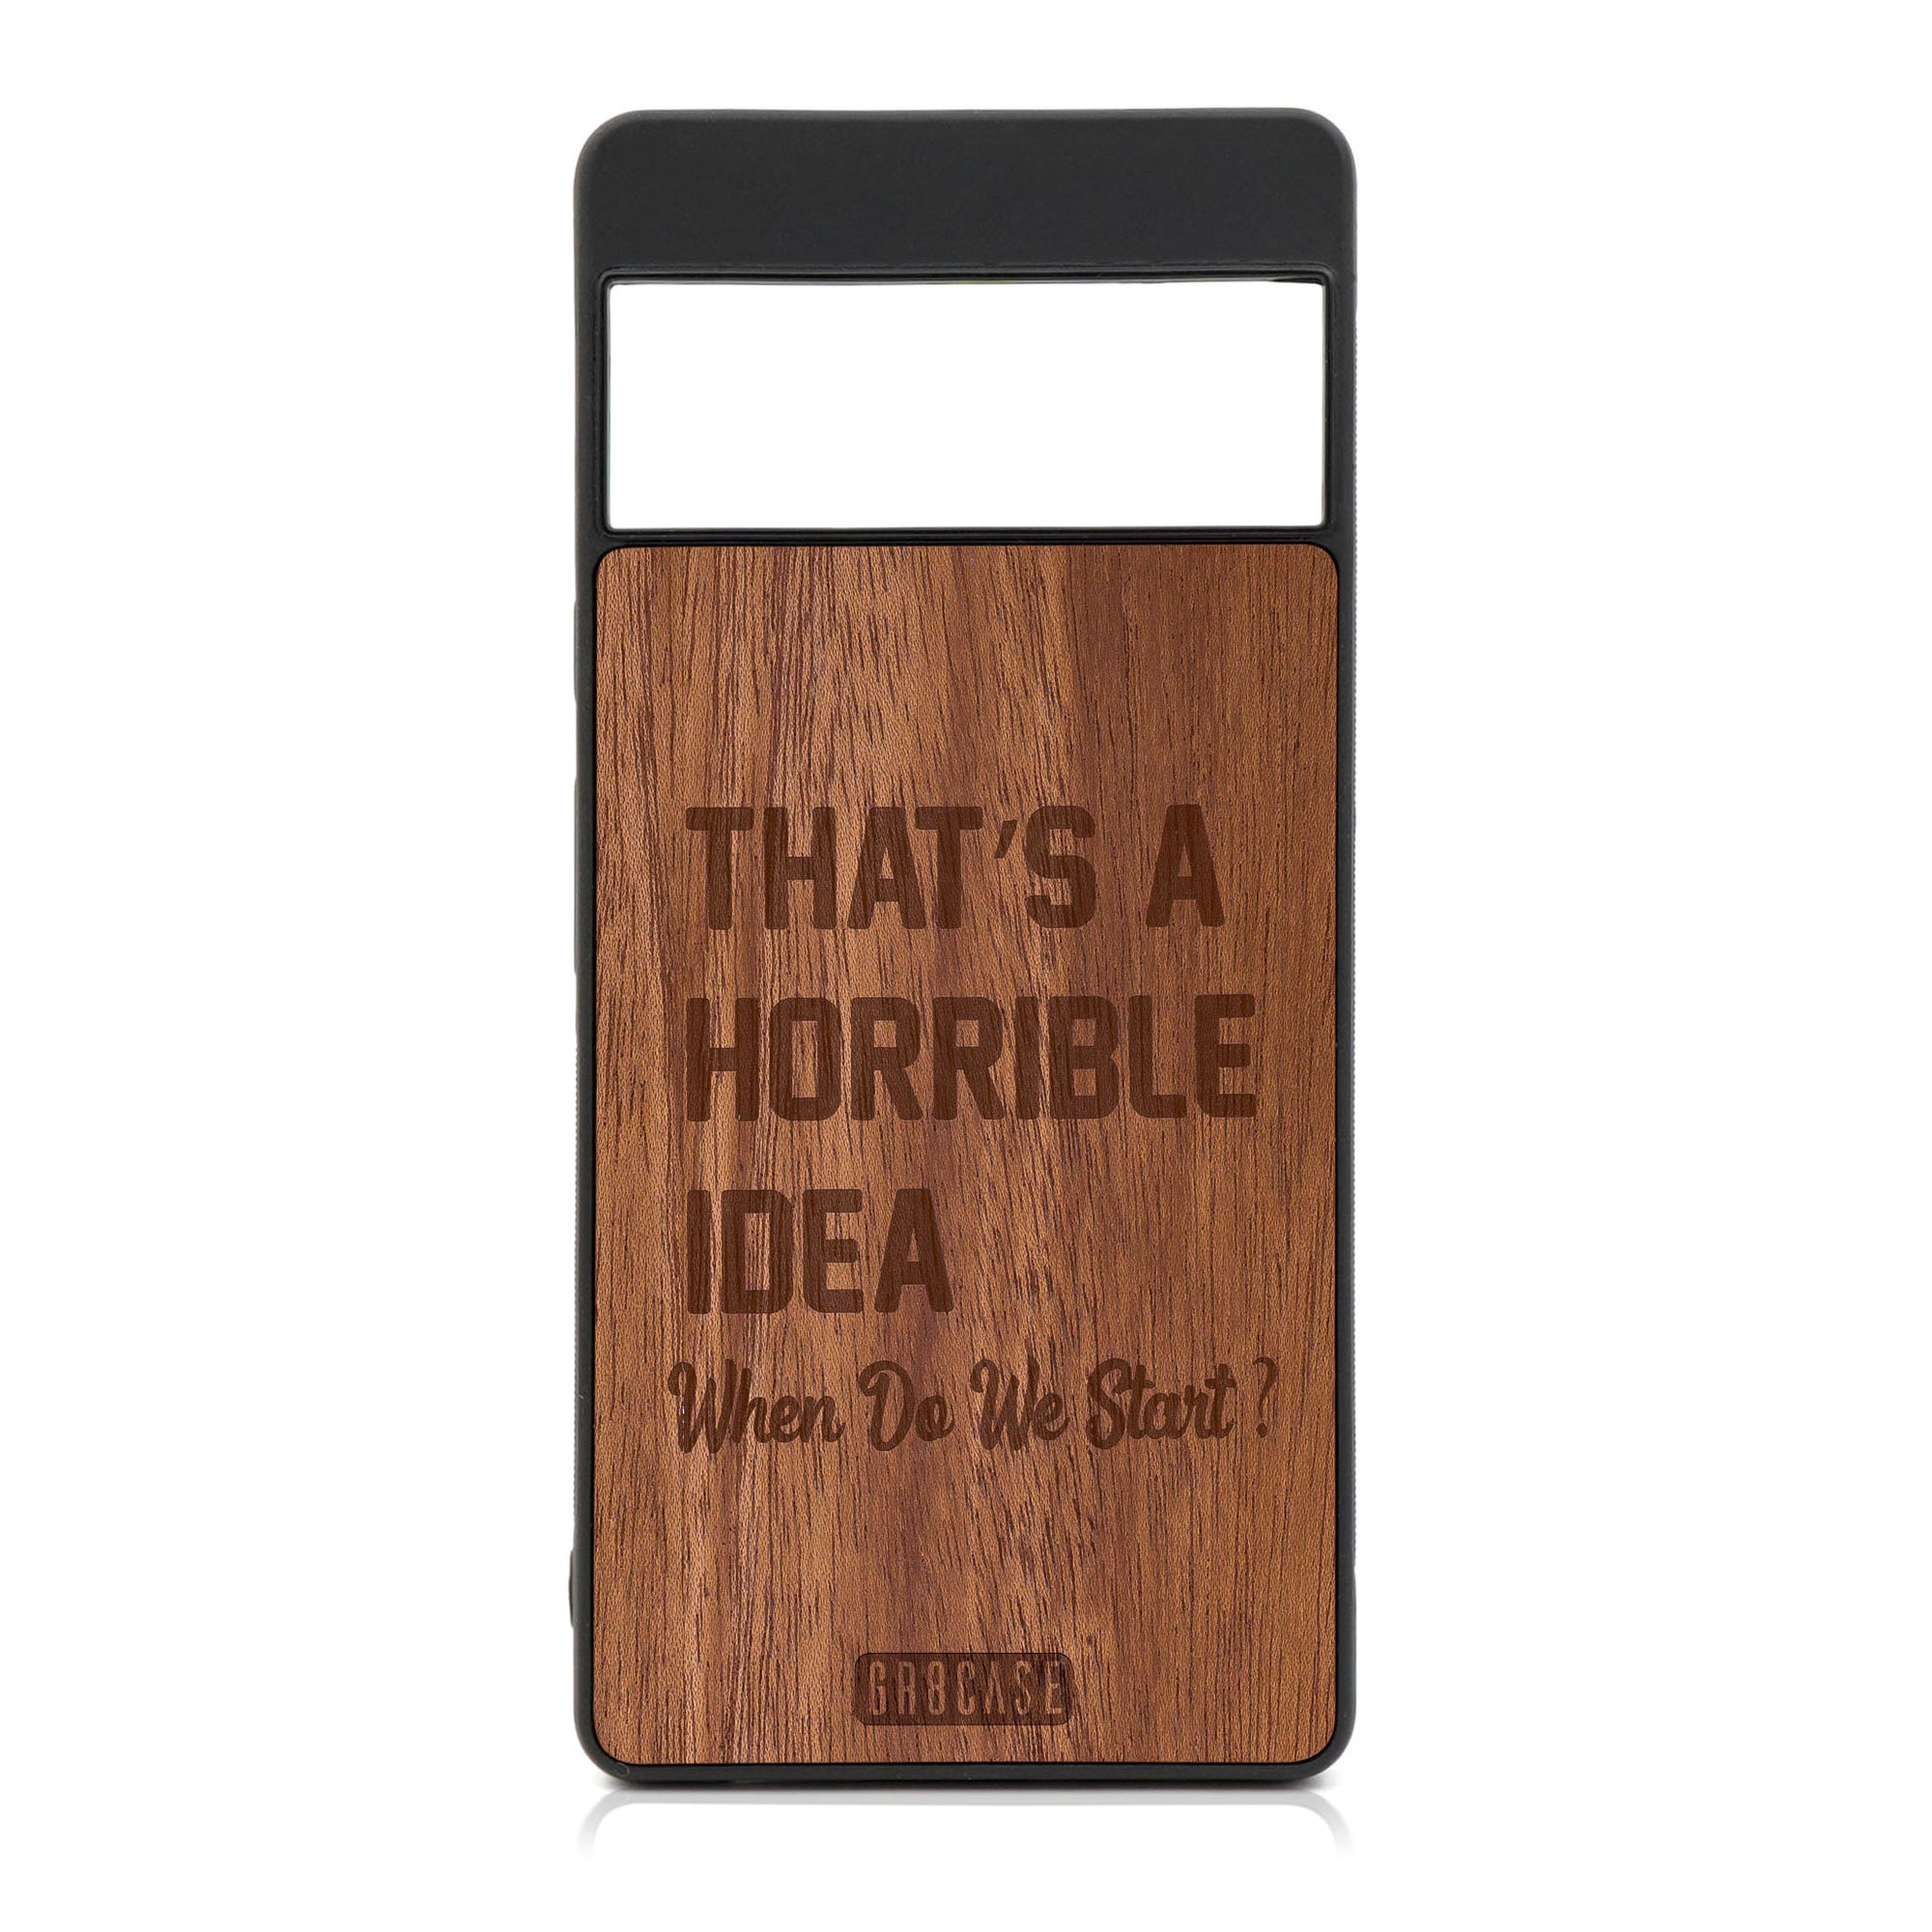 That's A Horrible Idea When Do We Start? Design Wood Case For Google Pixel 6